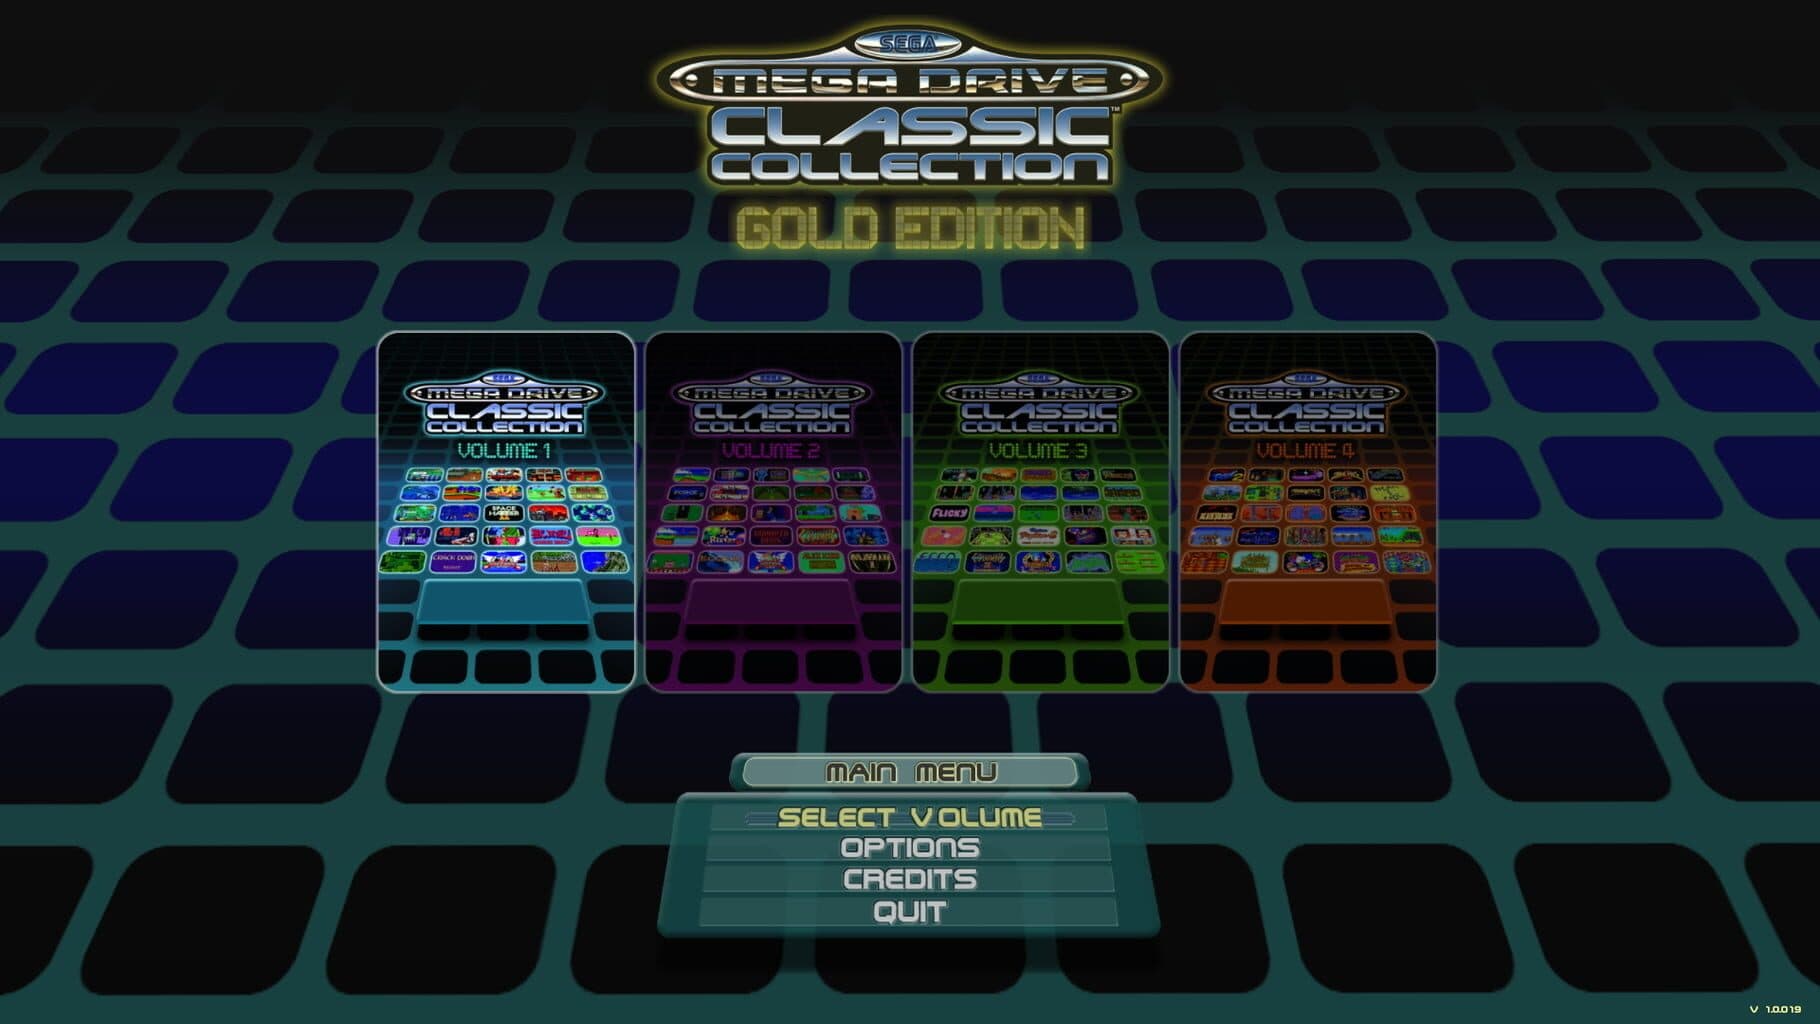 Sega Genesis Classic Collection: Gold Edition Image